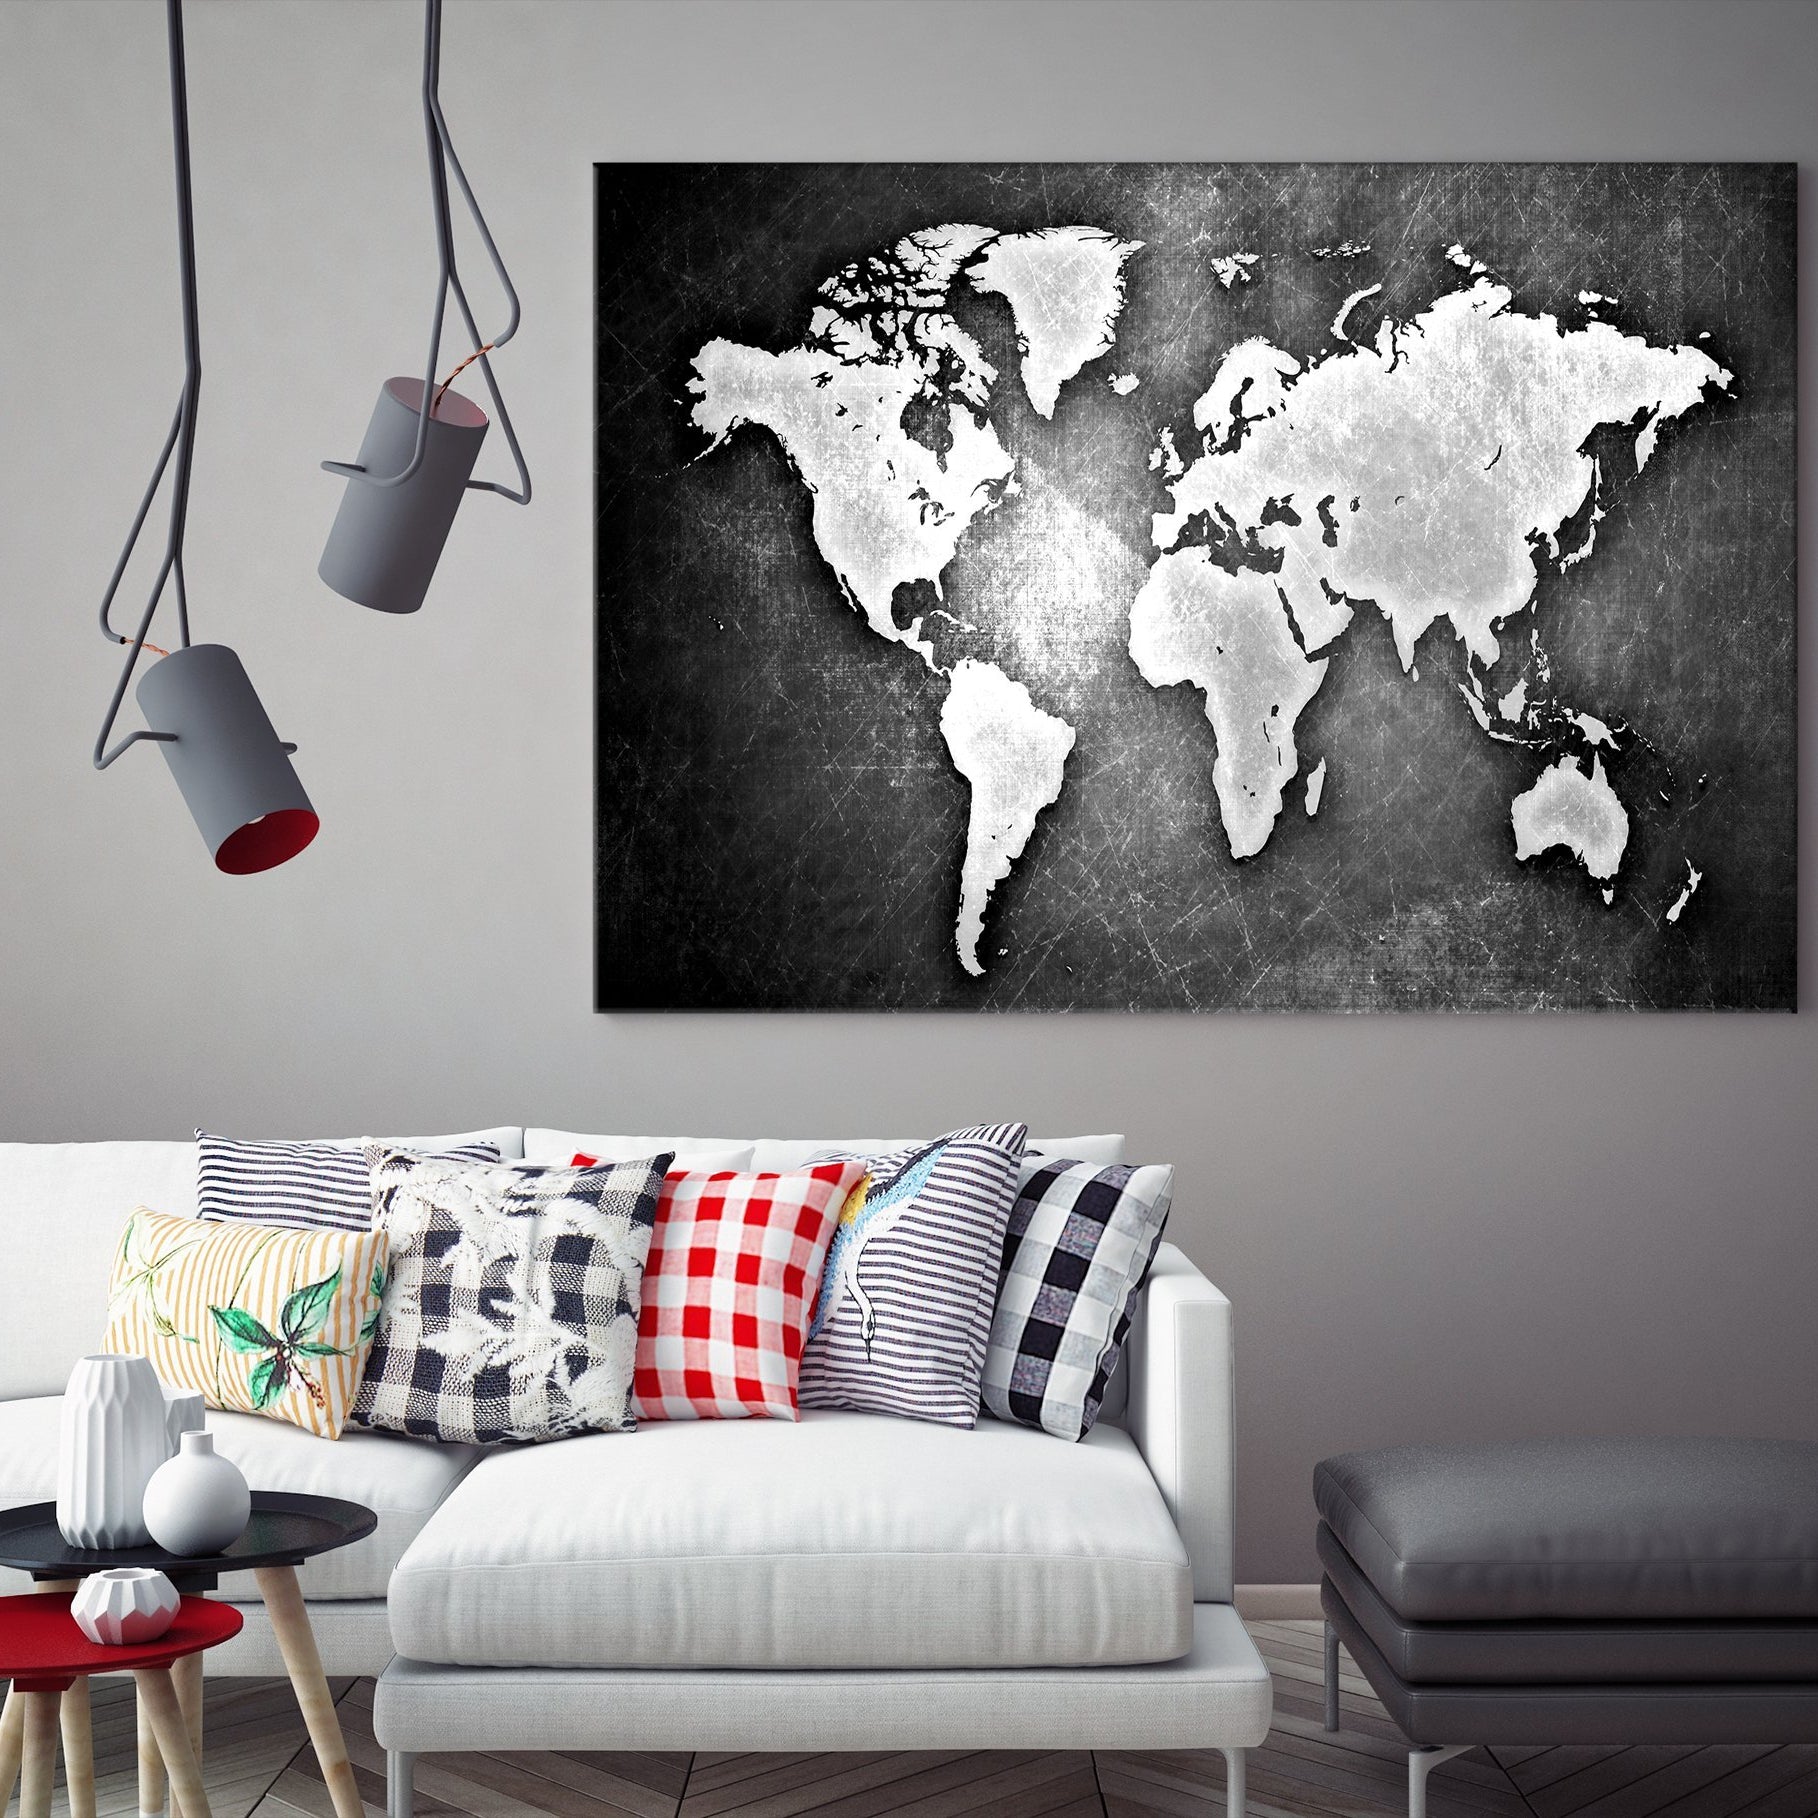 N14451 - Modern Large Black Metalic Wall Art World Map Map Canvas Print for Living Room Decor Art- Ready to Hang-Giclee Canvas Print-World Map Wall Art-Single Panel-24X16-Extra Large Wall Art Canvas Print